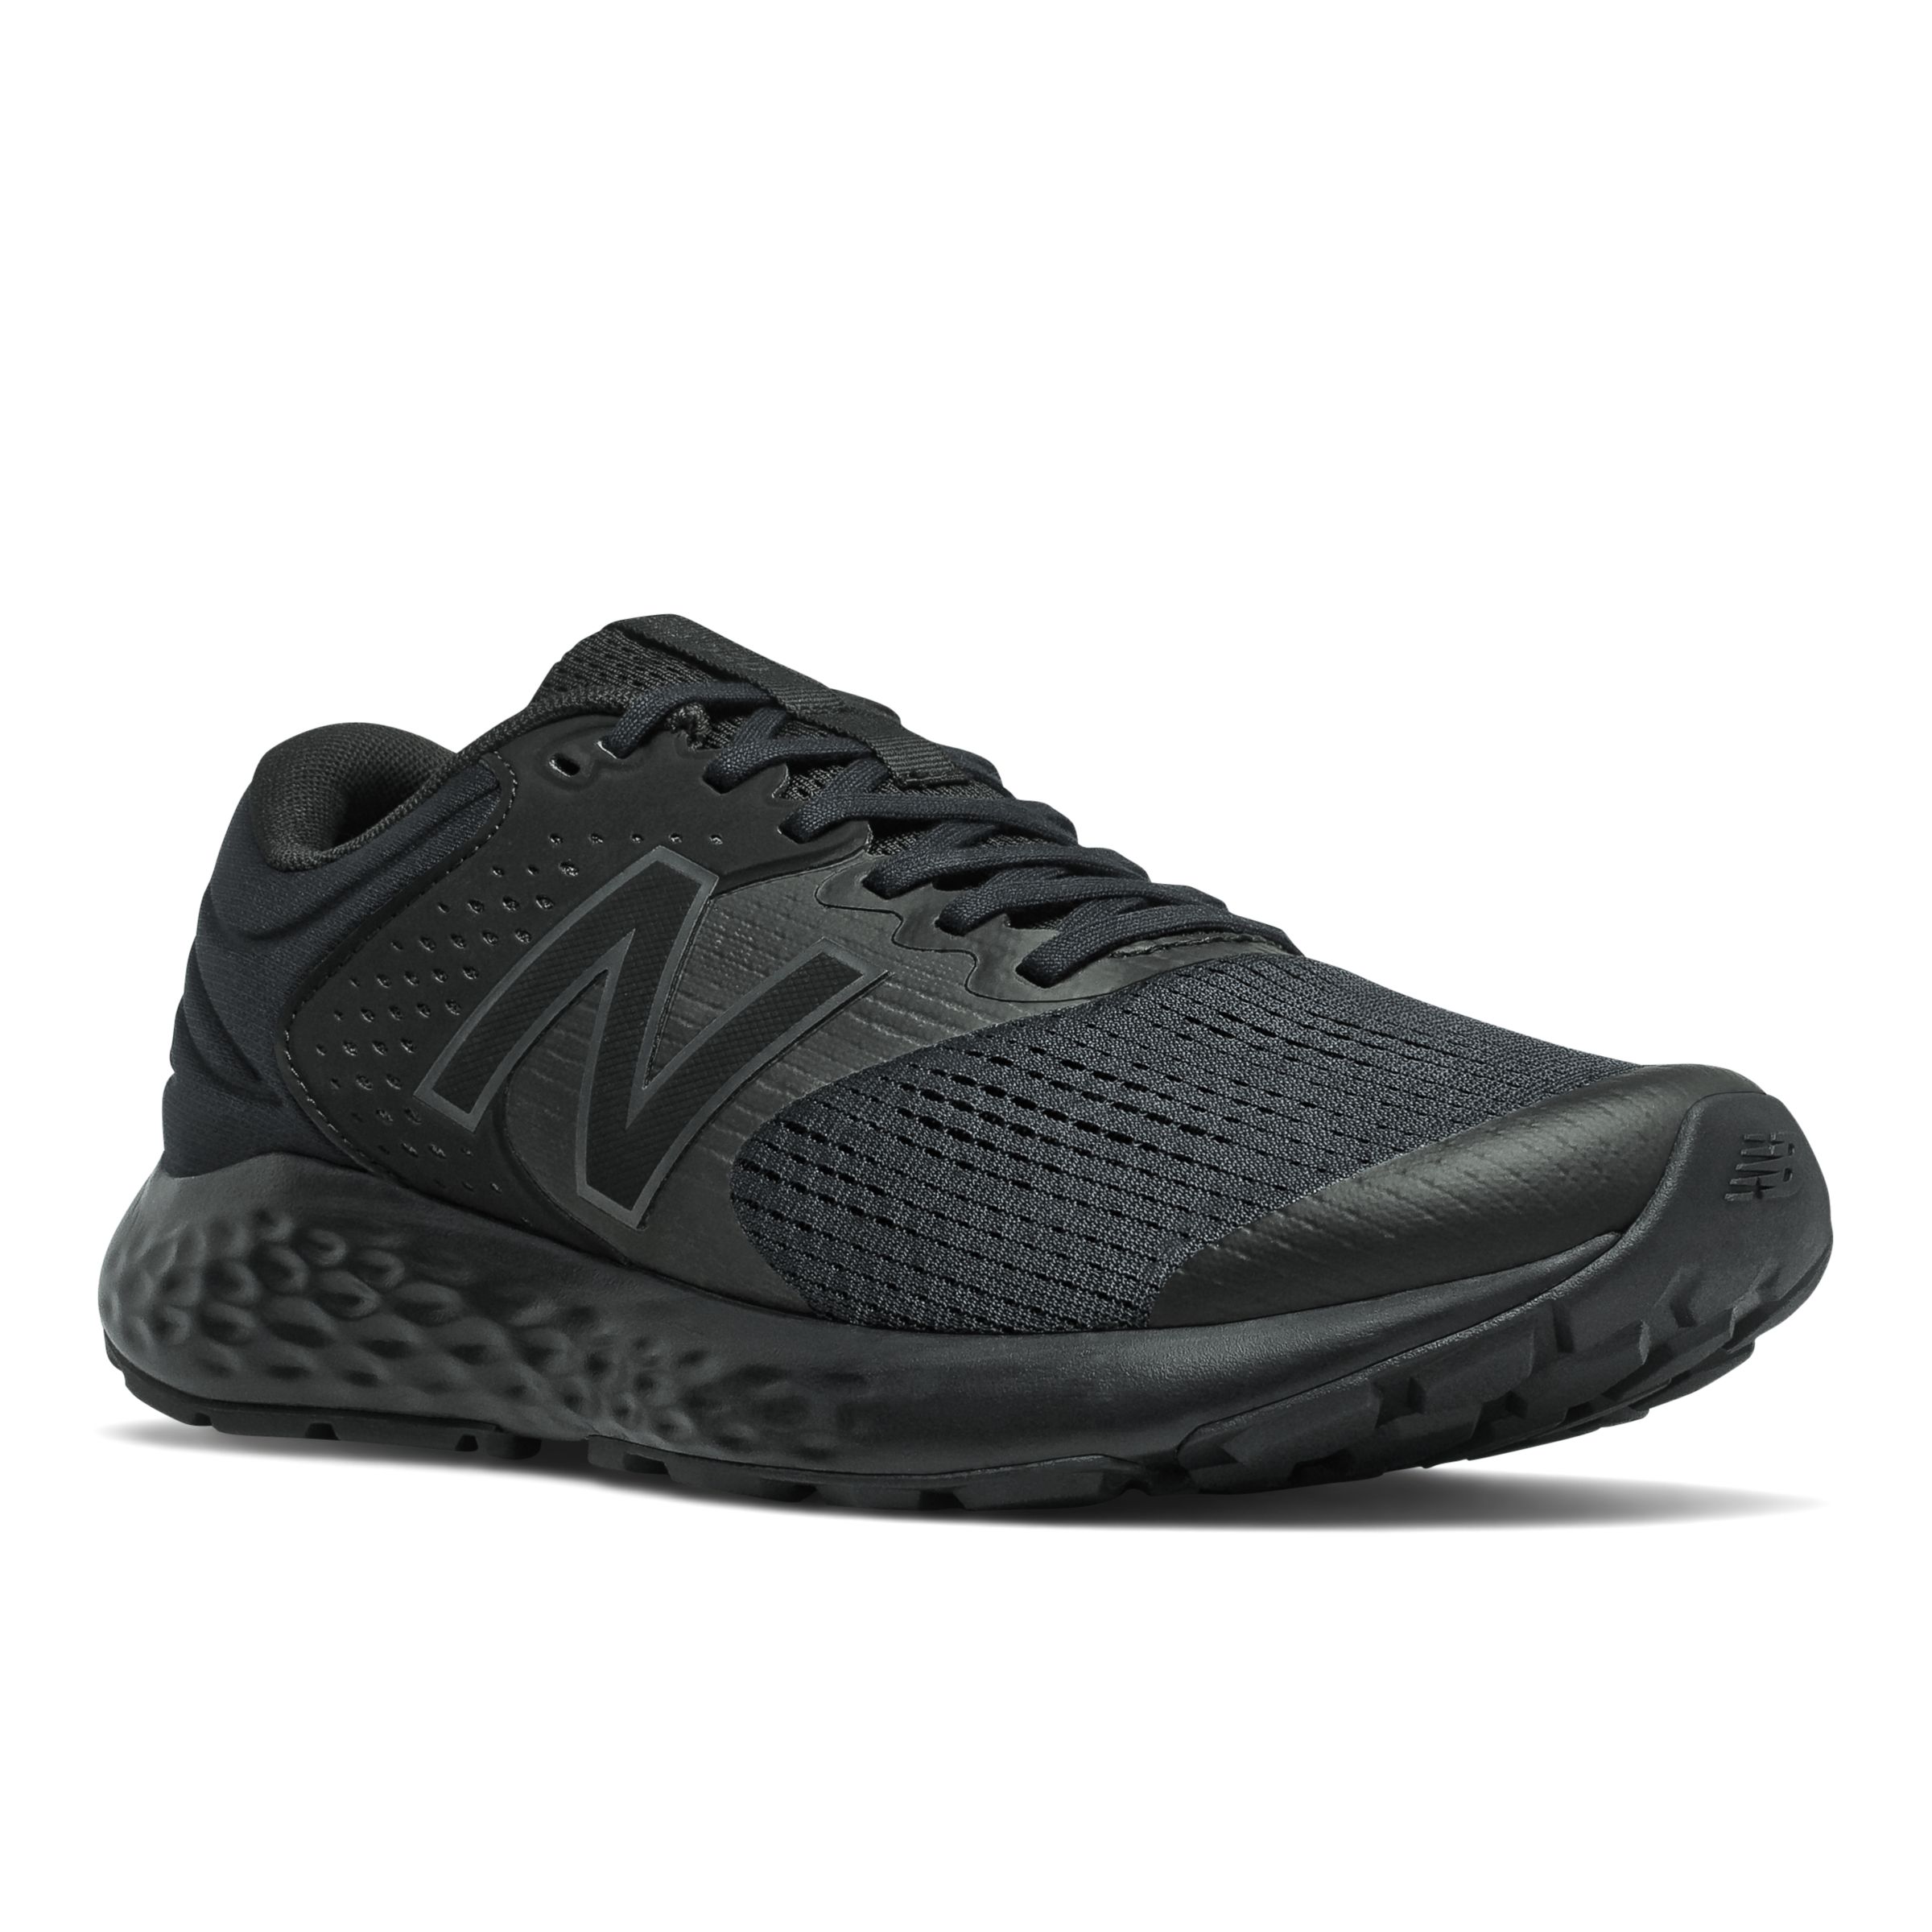 New Balance 520v7 Textile Men's Running Performance Lifestyle Shoes | eBay